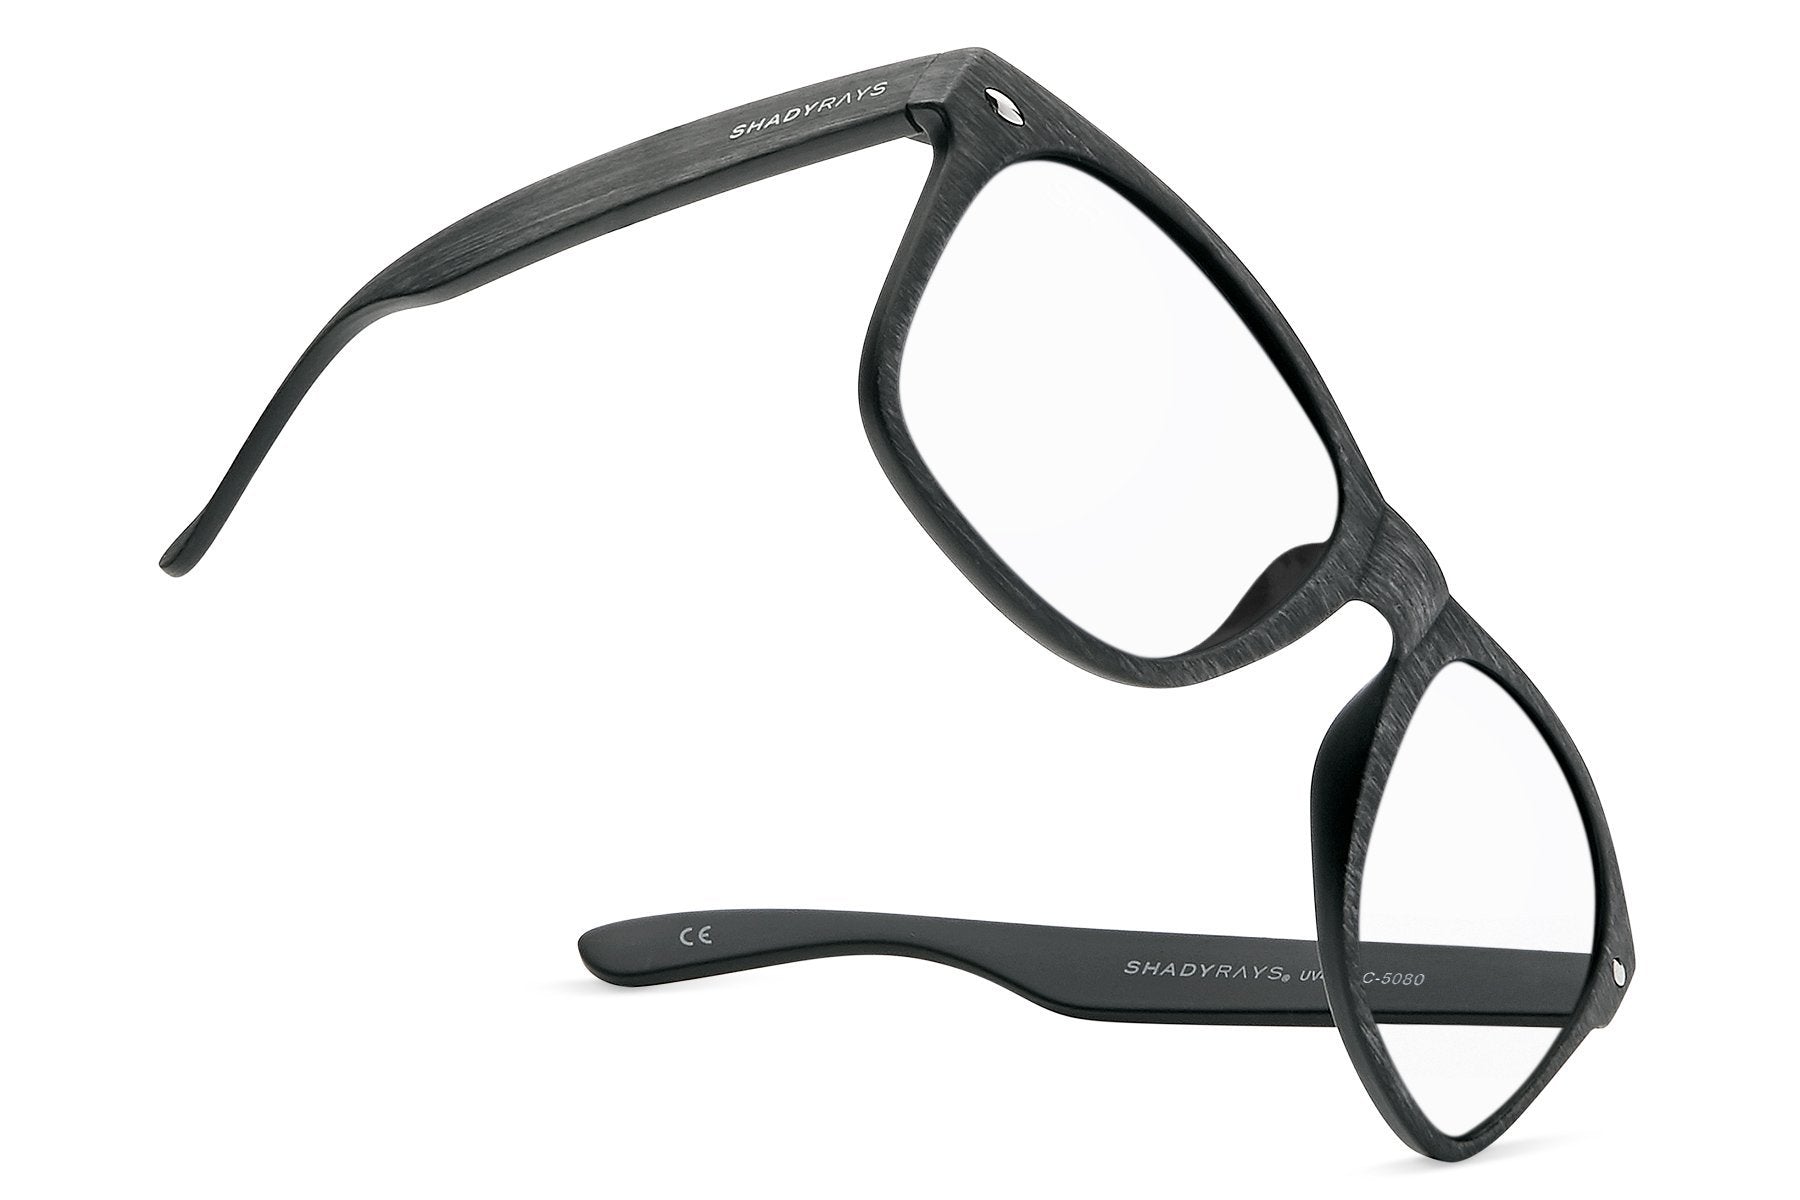 Classic Rx - Black Timber Rx Shady Rays® | Polarized Sunglasses 